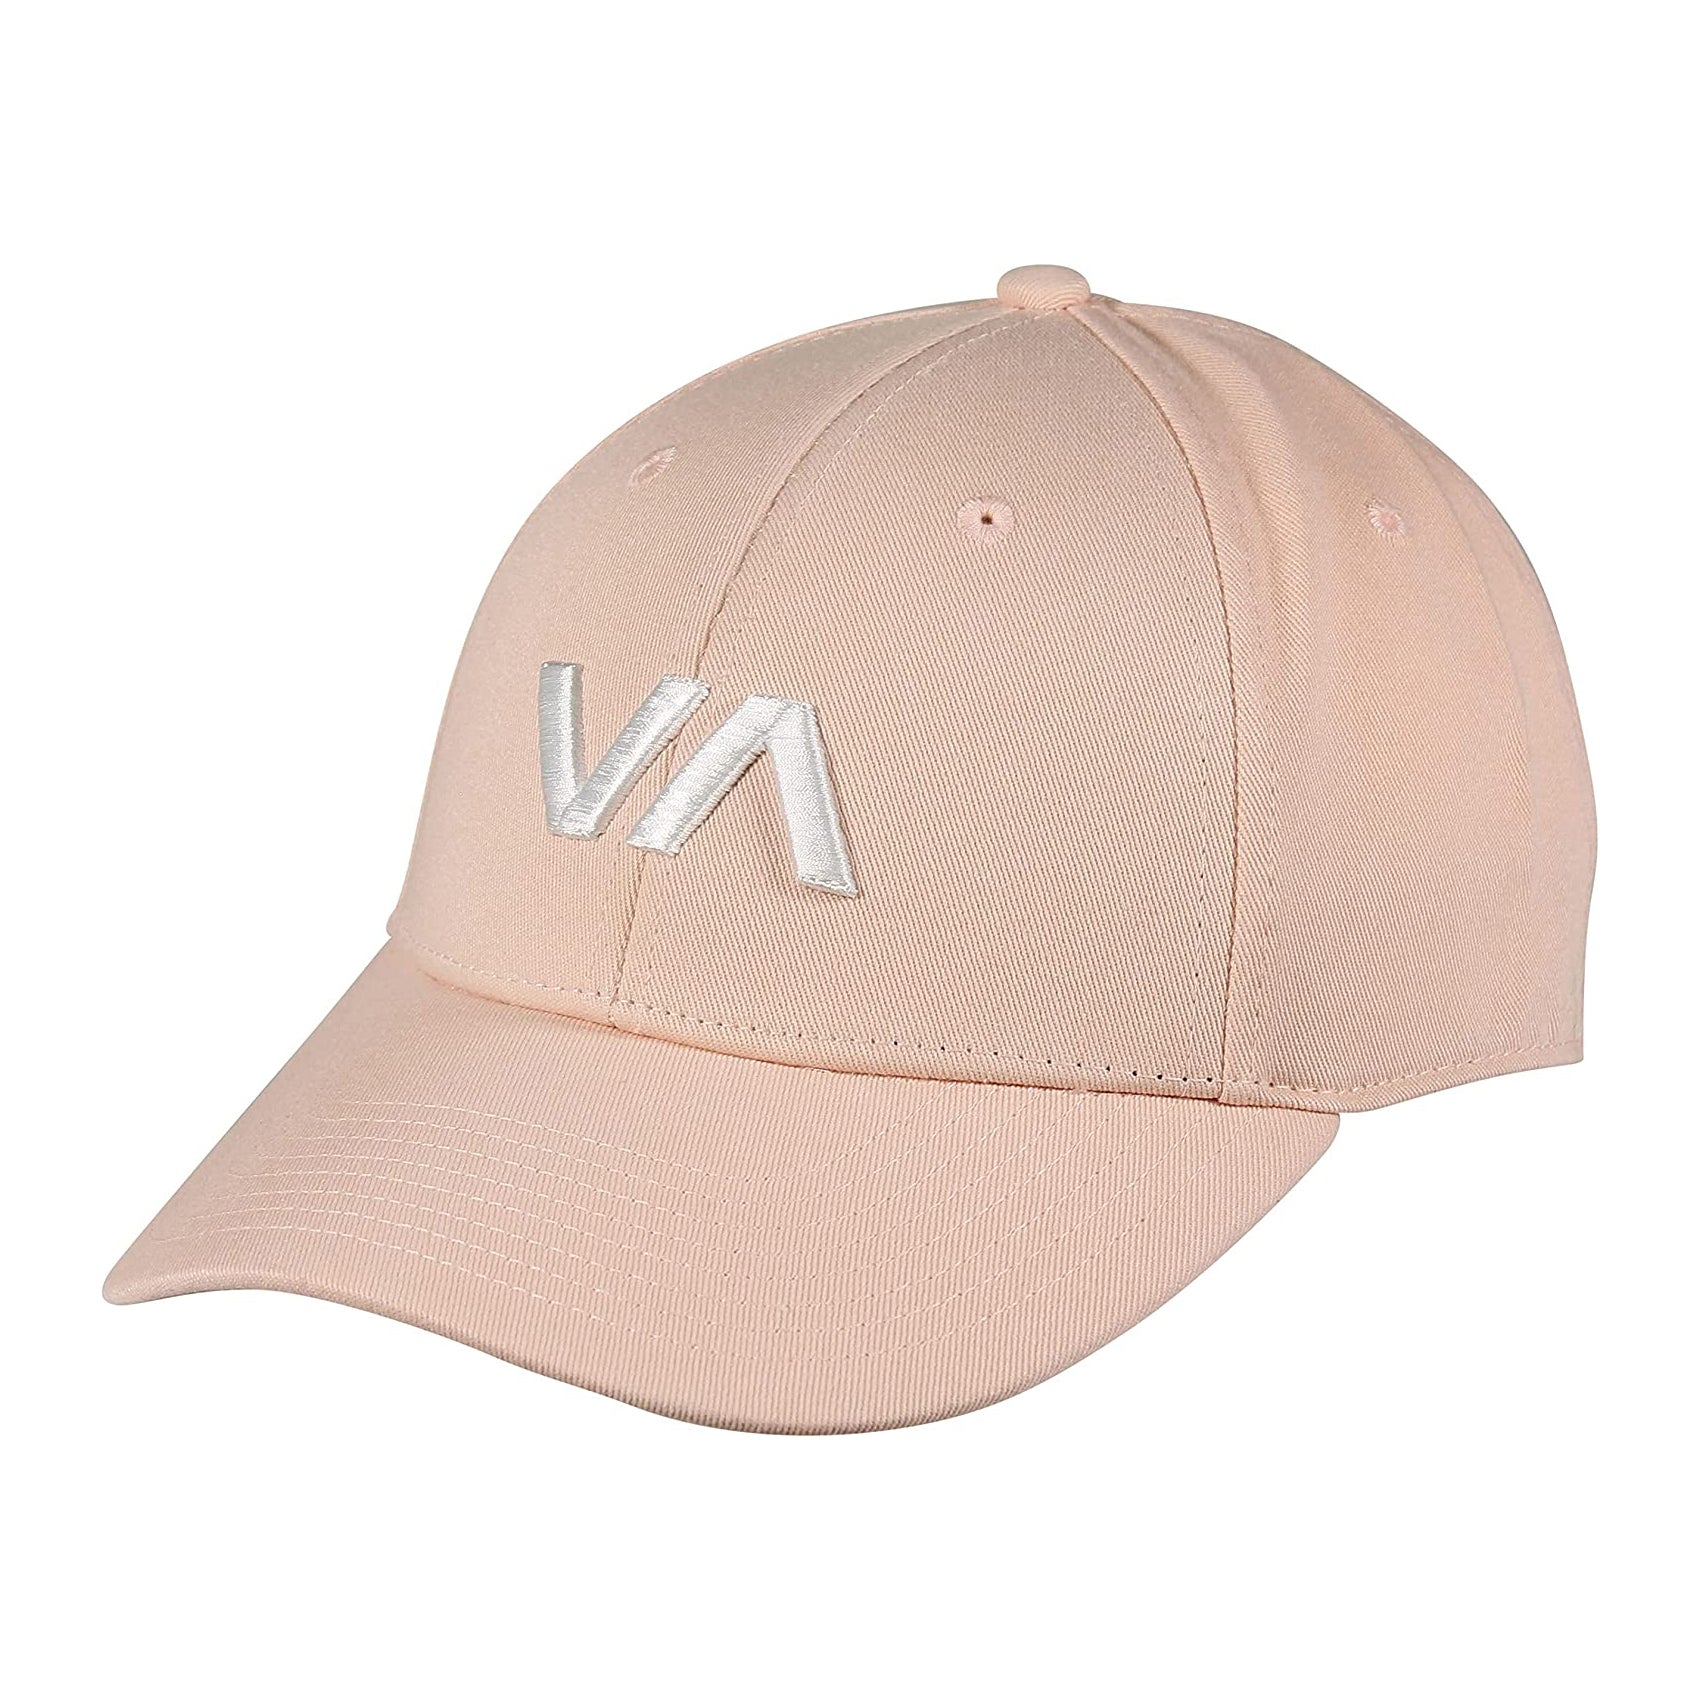 RVCA VA Baseball Hat